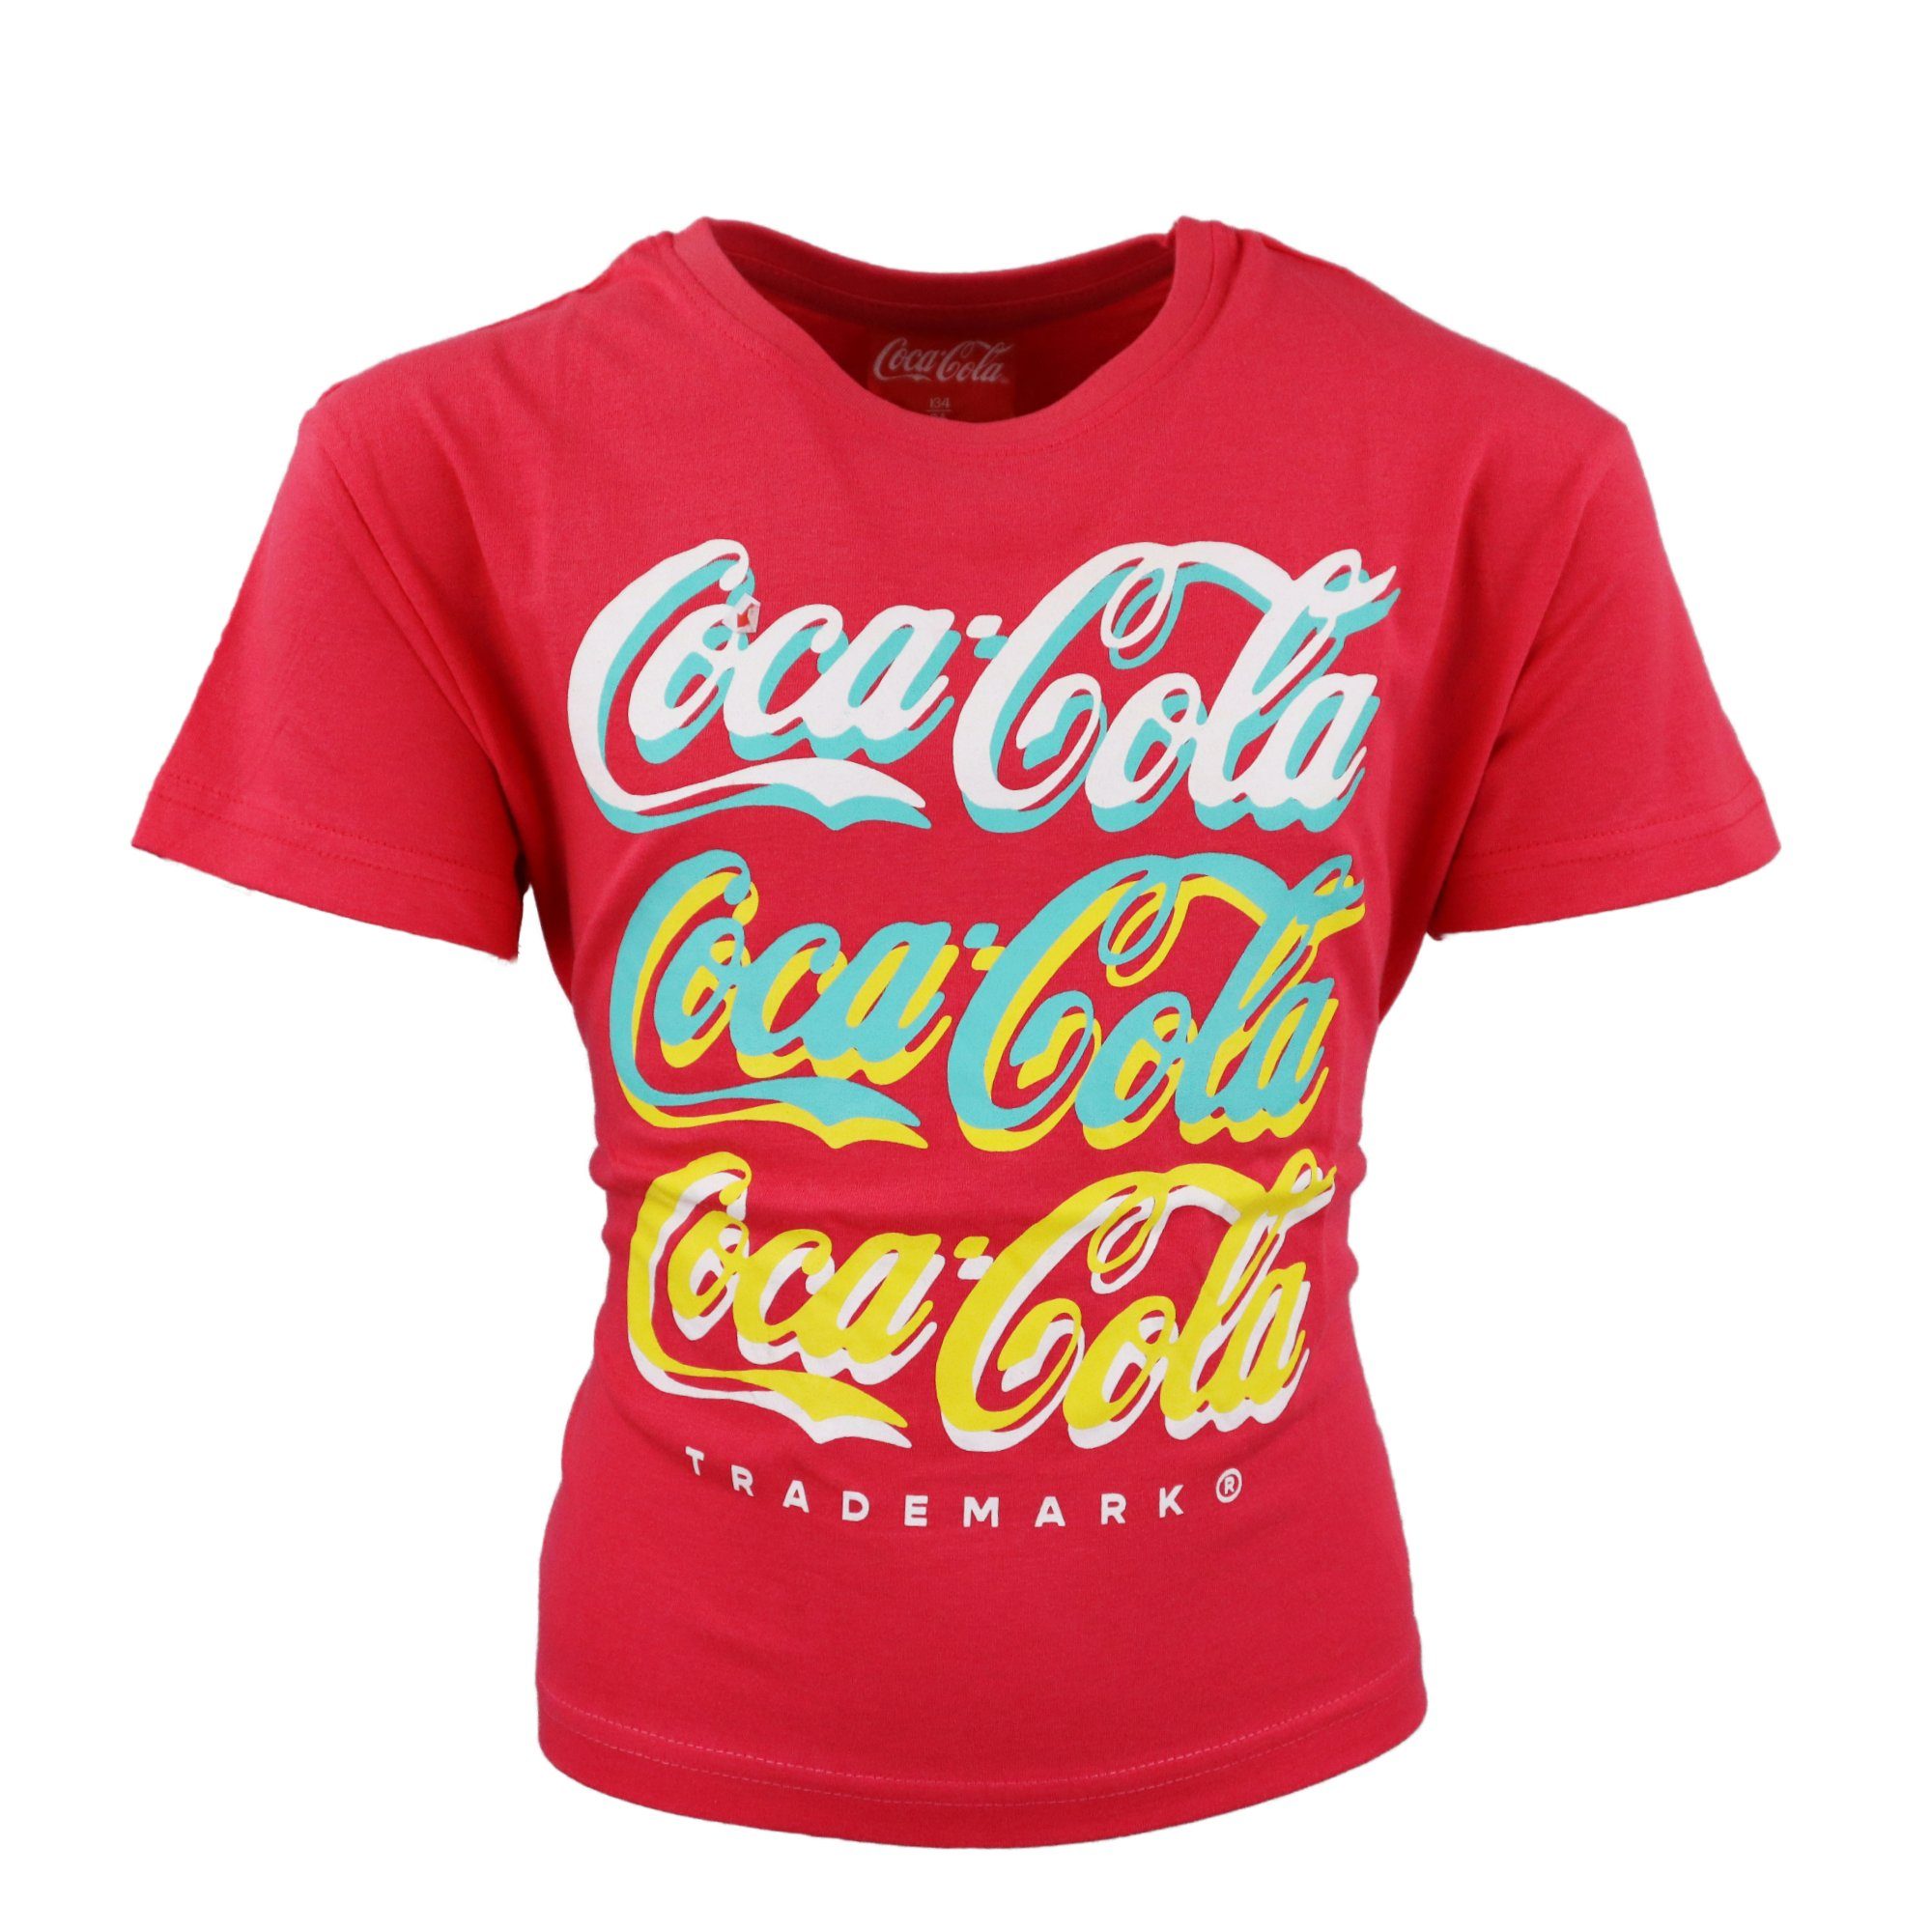 COCA COLA Print-Shirt Coca Cola T-Shirt Kinder Jugend Mädchen kurzes Top Gr. 134 bis 164, Baumwolle Rot